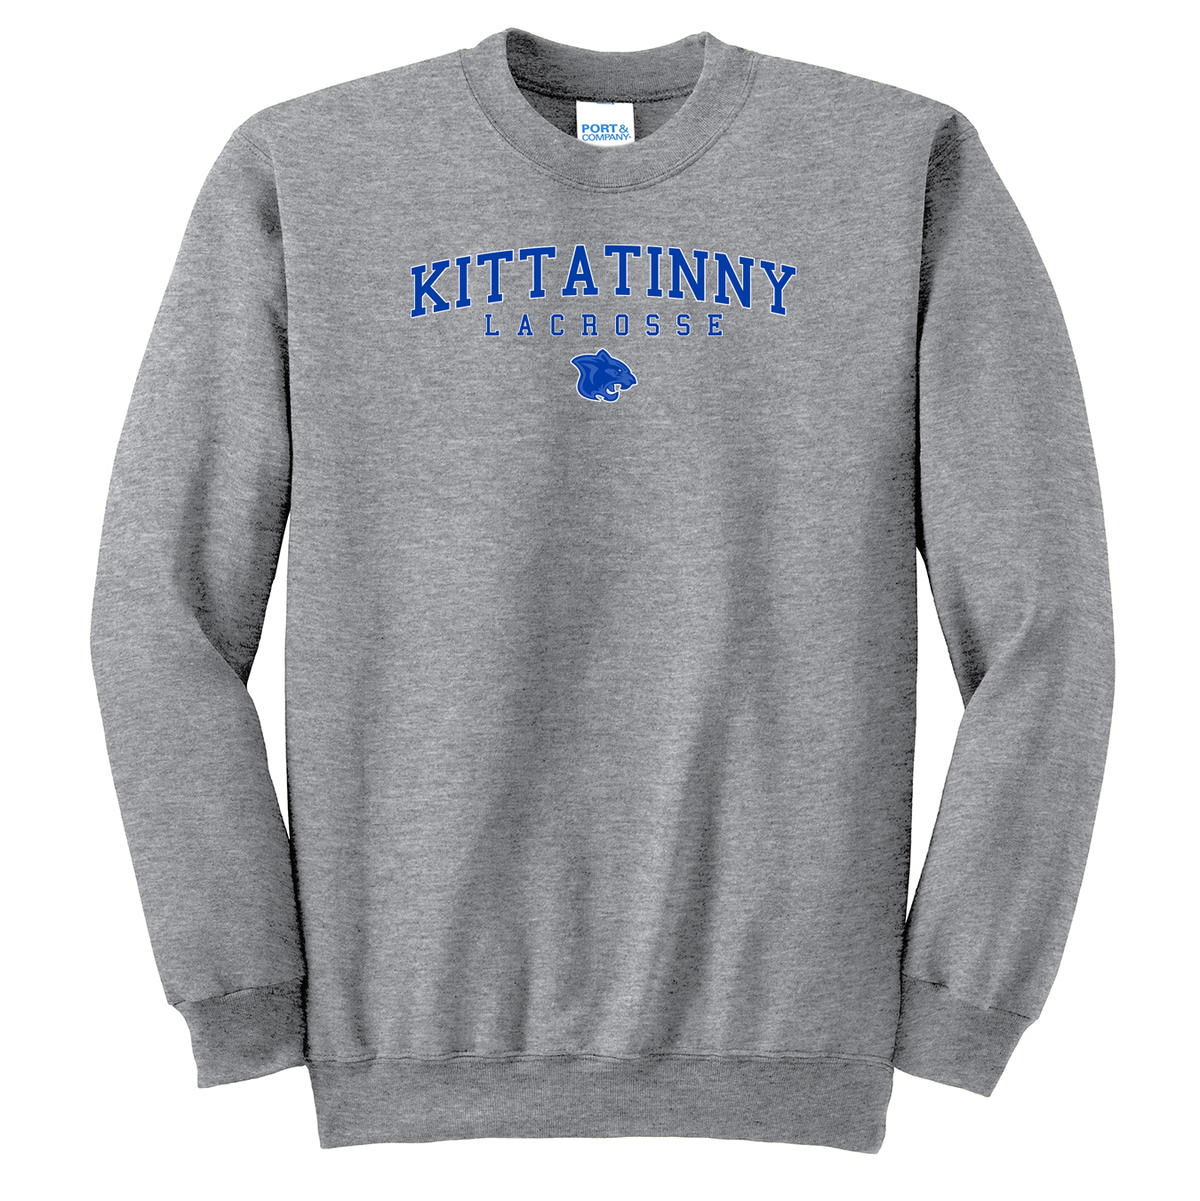 Kittatinny Lacrosse Crew Neck Sweater